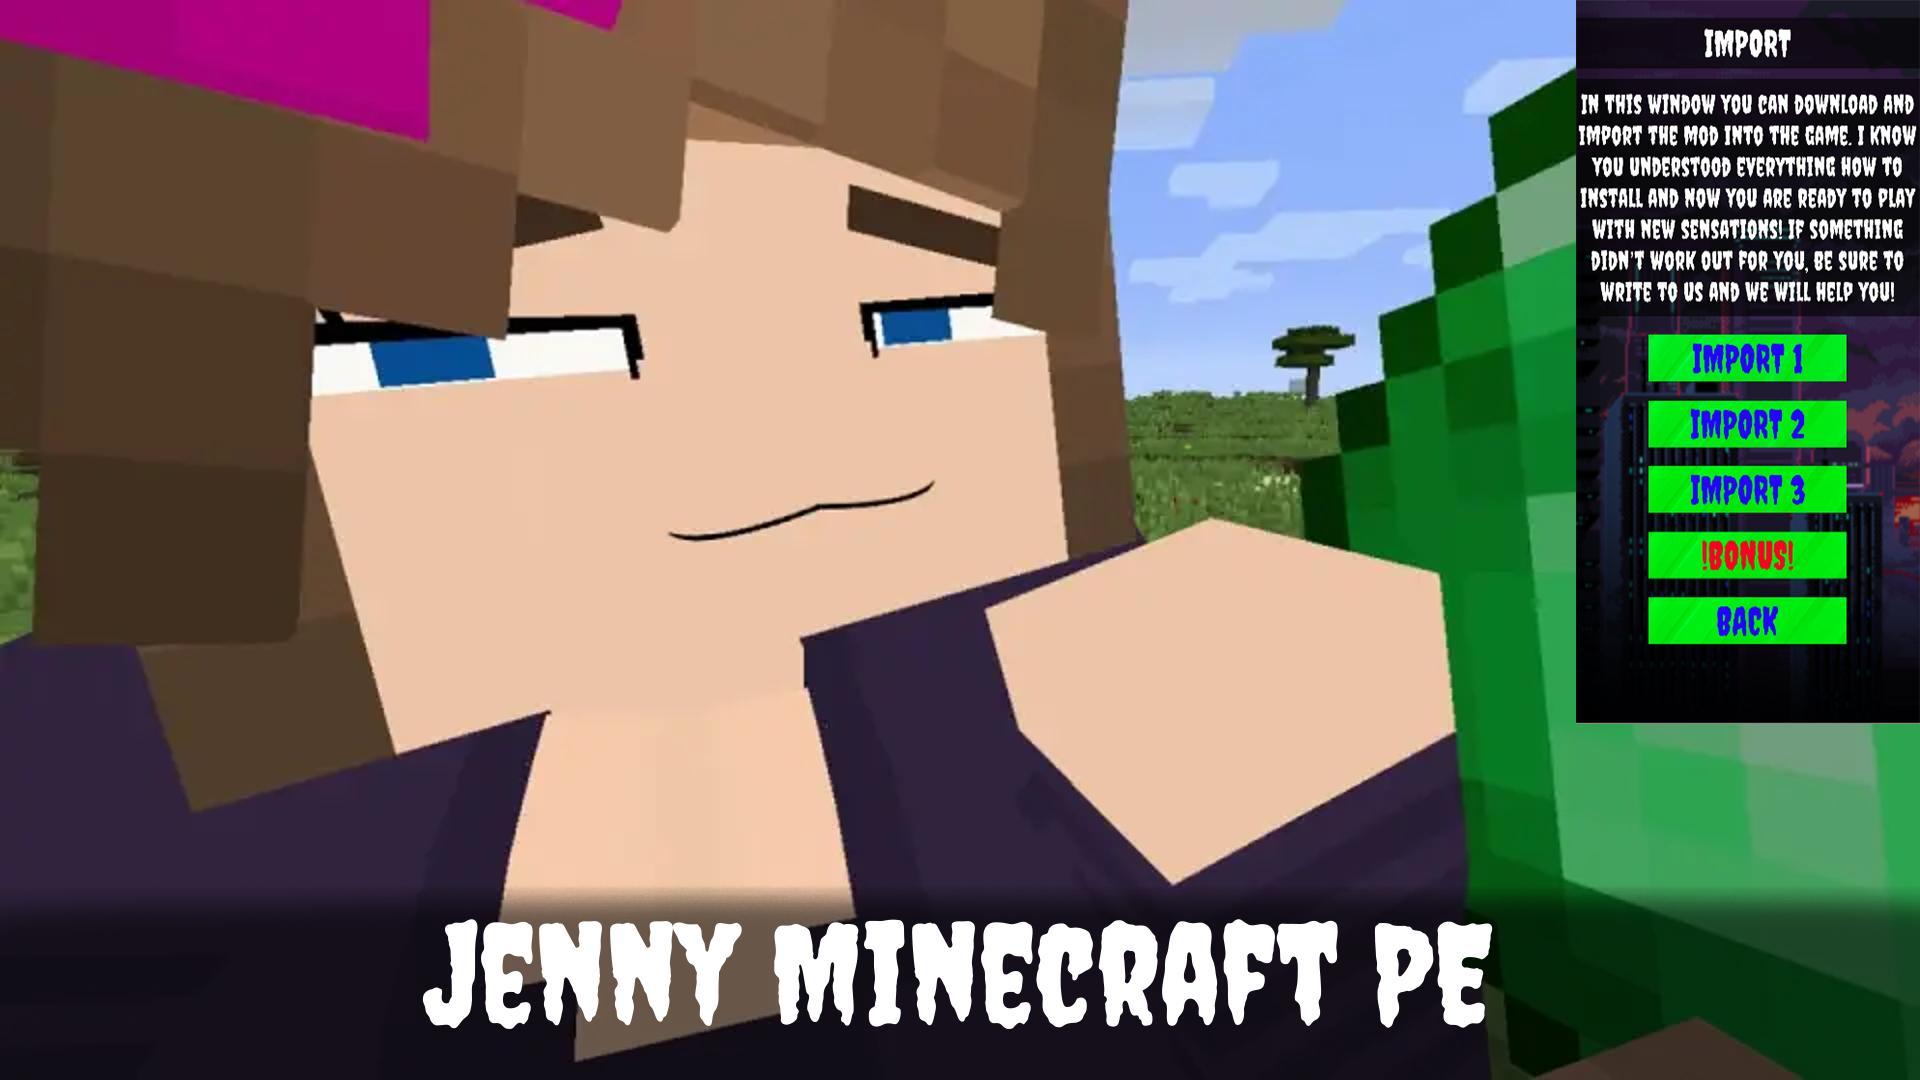 Propaganda do : Youlube al Jogos Jogos de quebra-cabeça mm 19 mil  344 MOD IN Download Jenny mod for Minecraft PE Jenny Mod for Minecraft PE  Anúncio - 4,3% GRÁTIS - iFunny Brazil